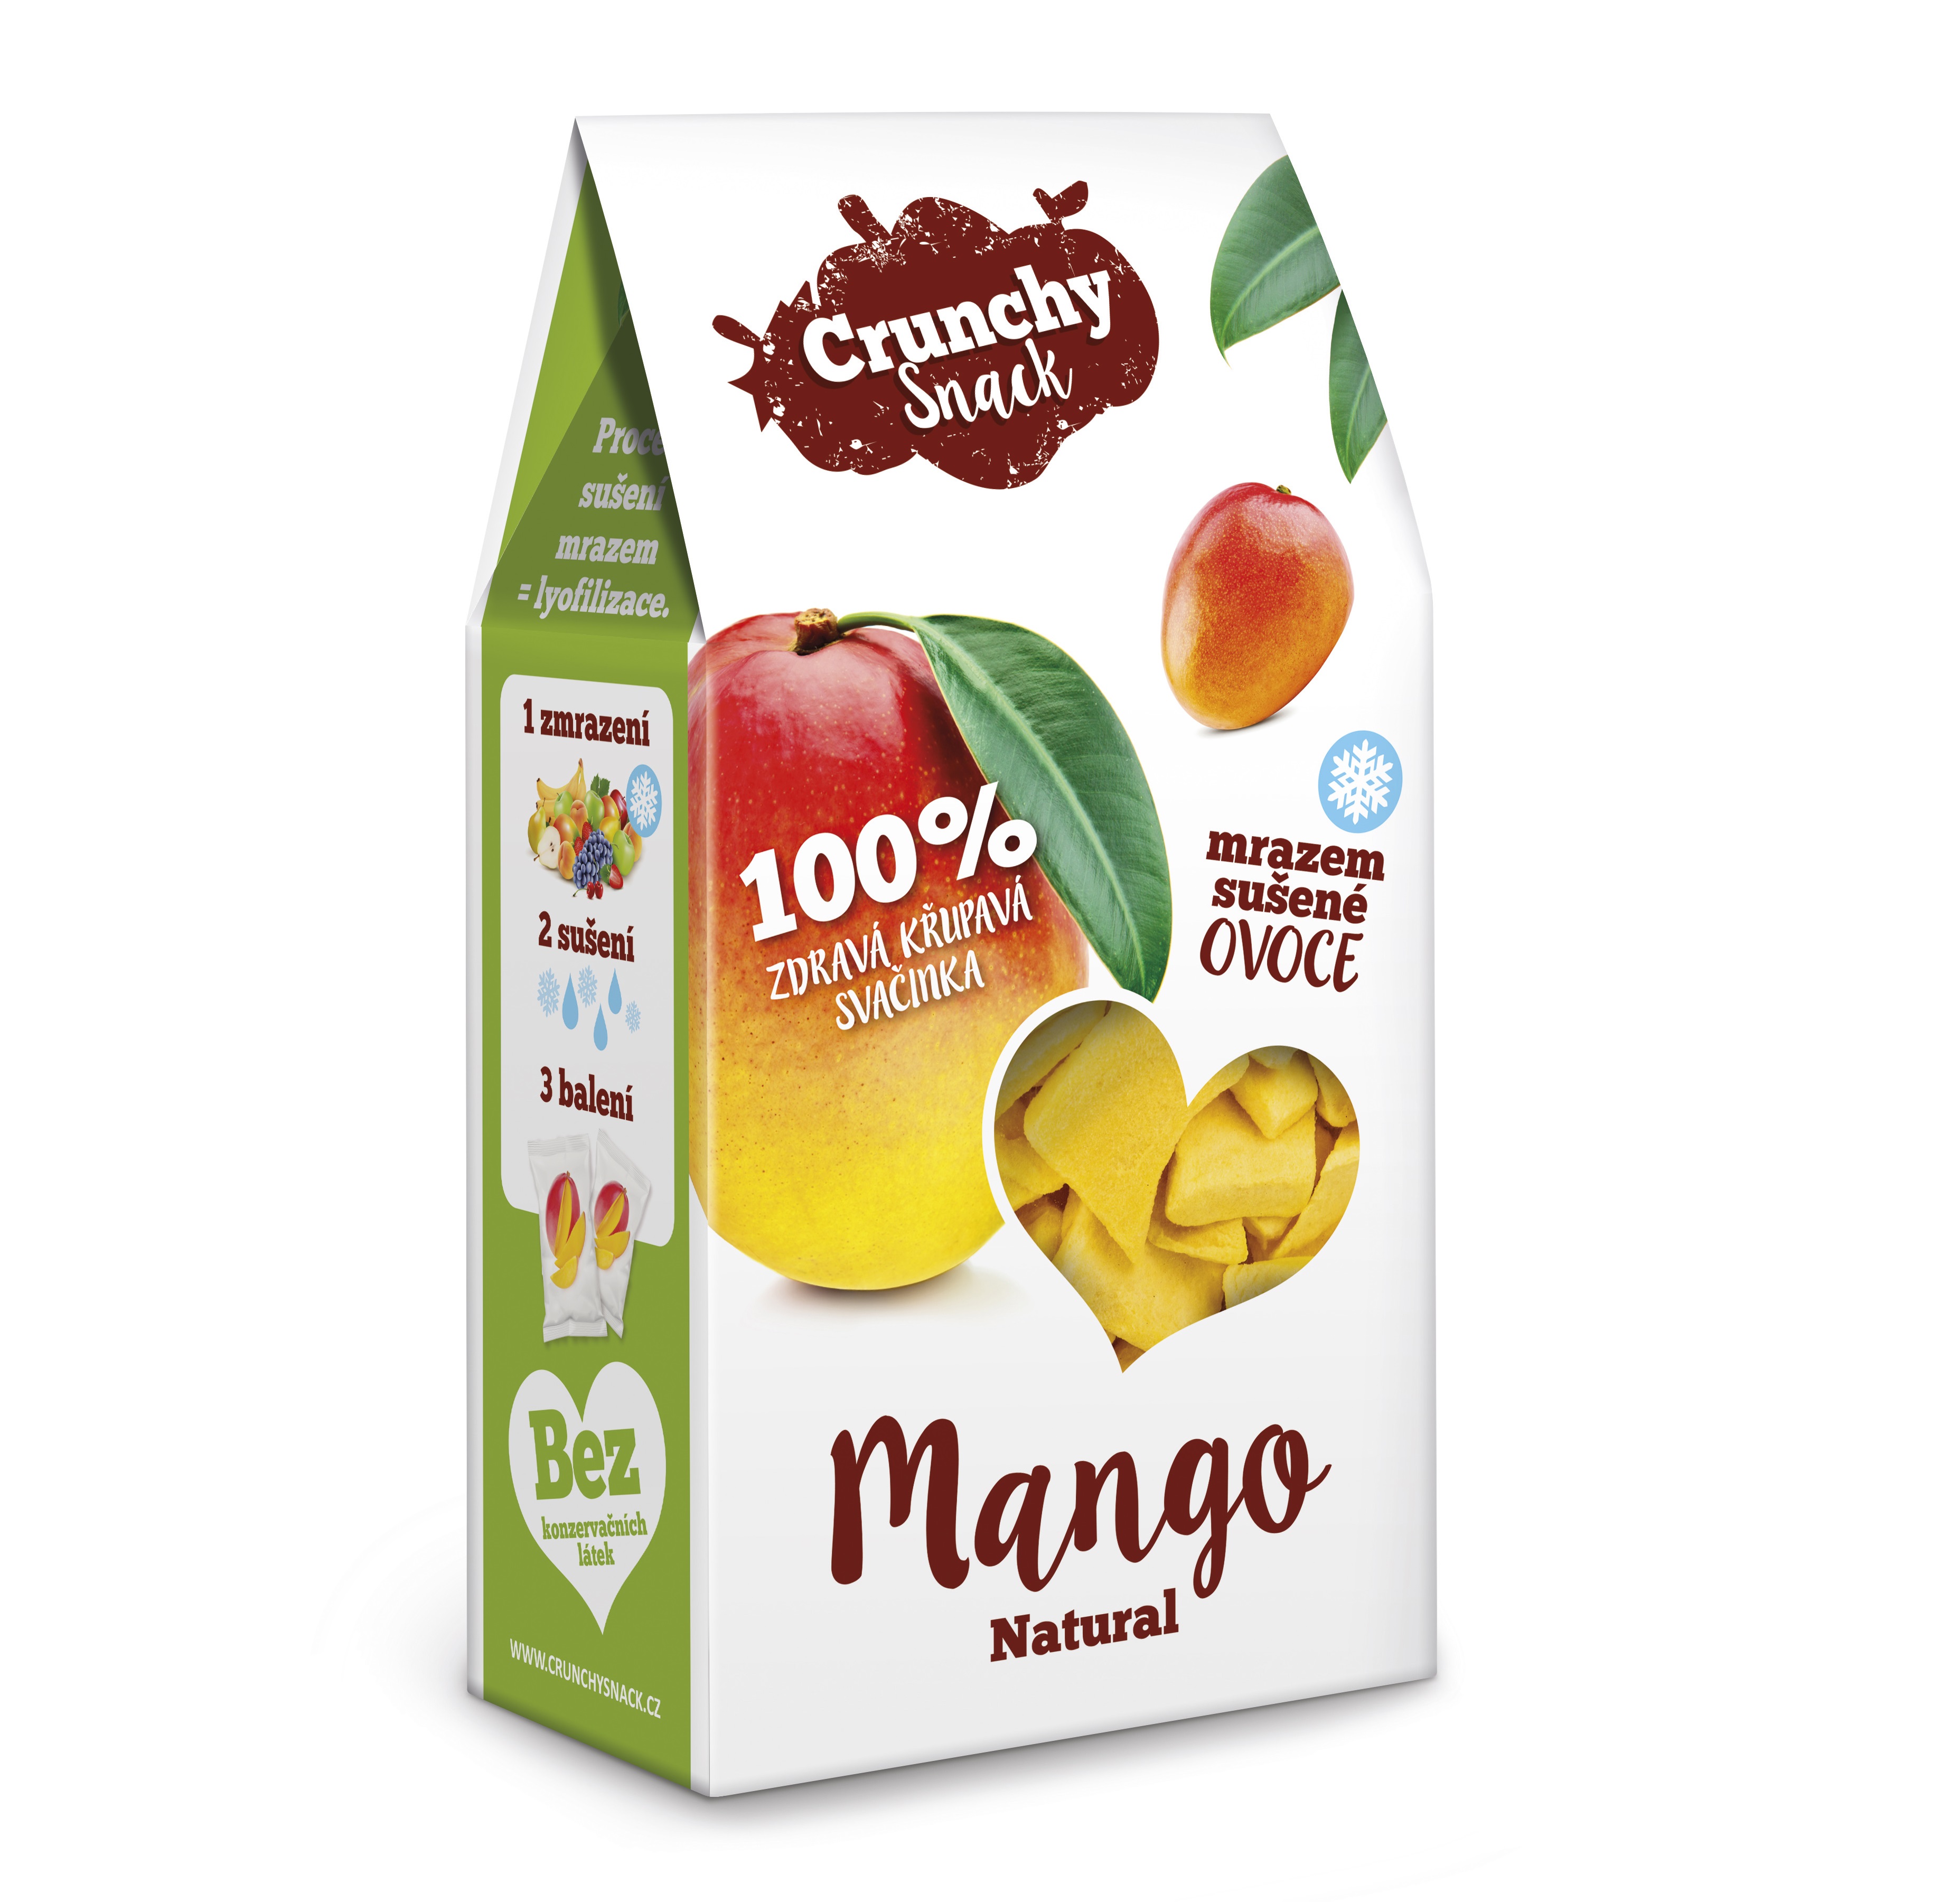 Crunchy snack Mangoct